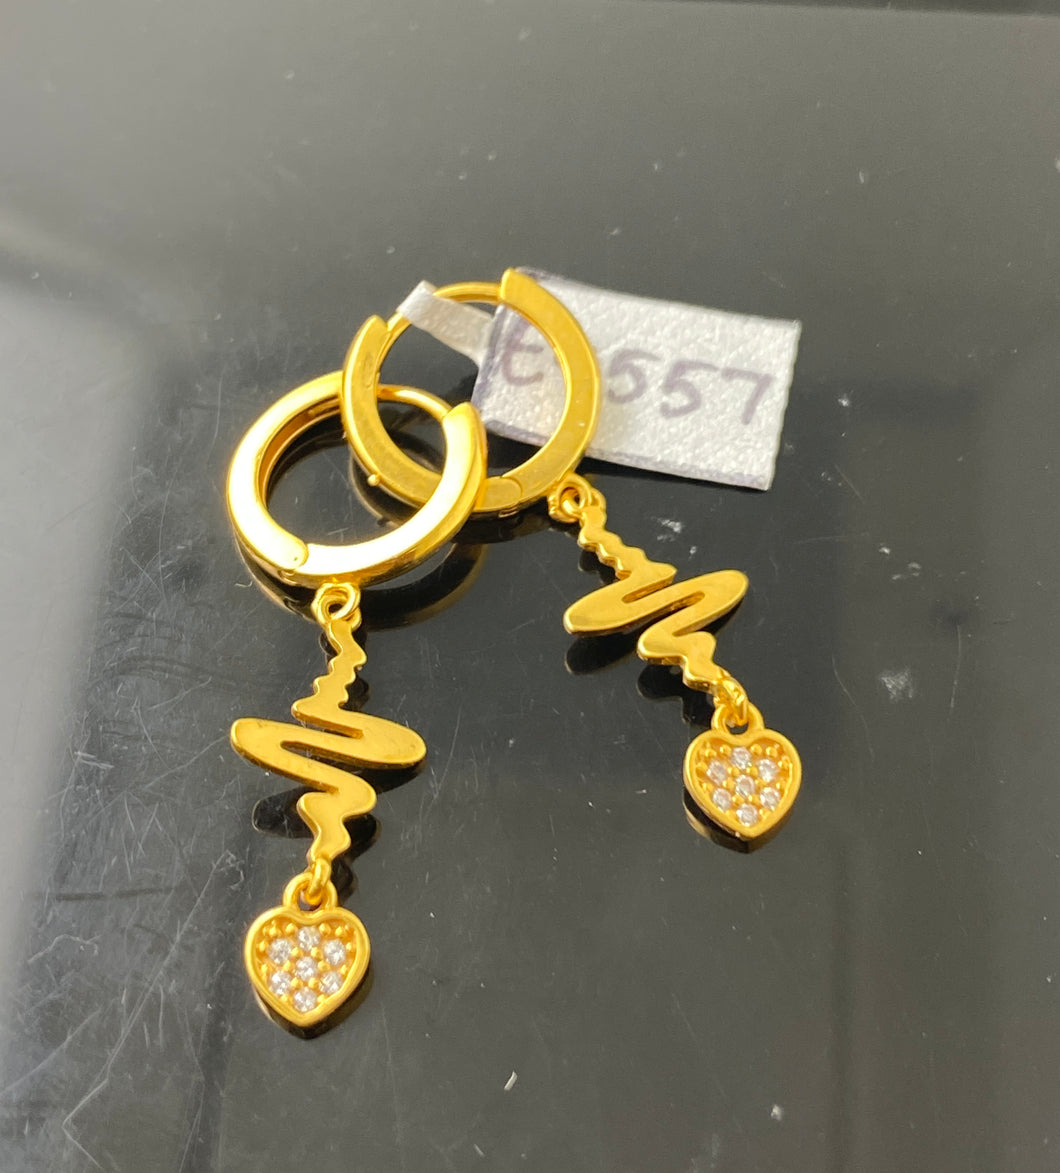 22K Solid Gold Lifeline Hoops With Heart E9557 - Royal Dubai Jewellers